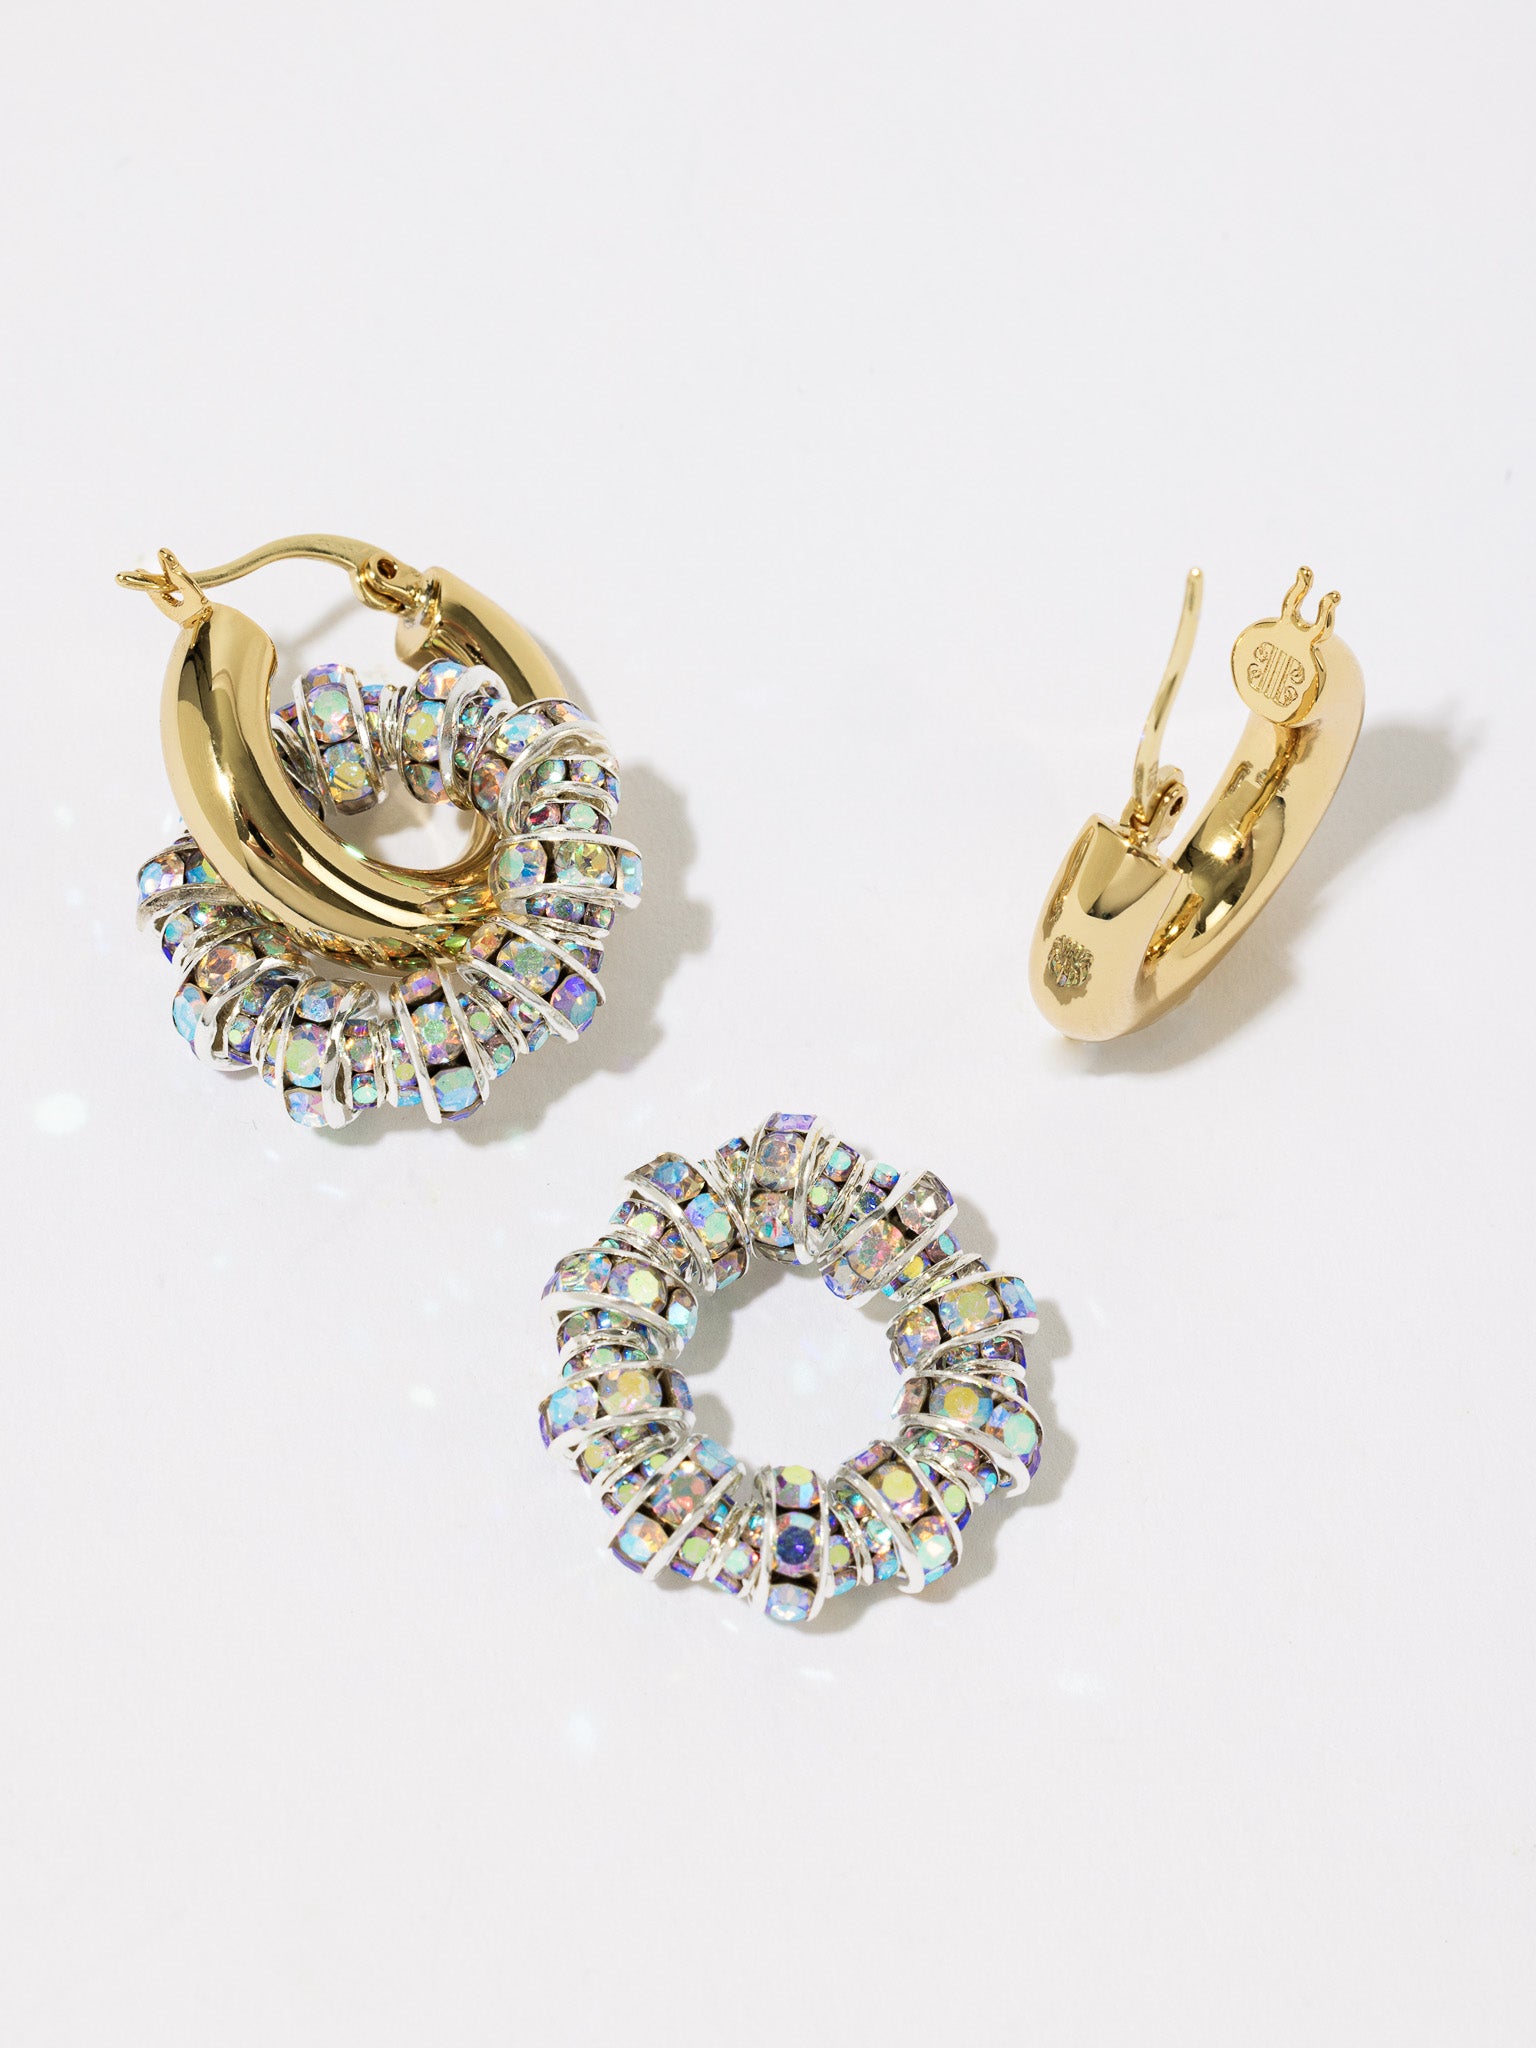 Les Créoles Petites Earrings in Gold